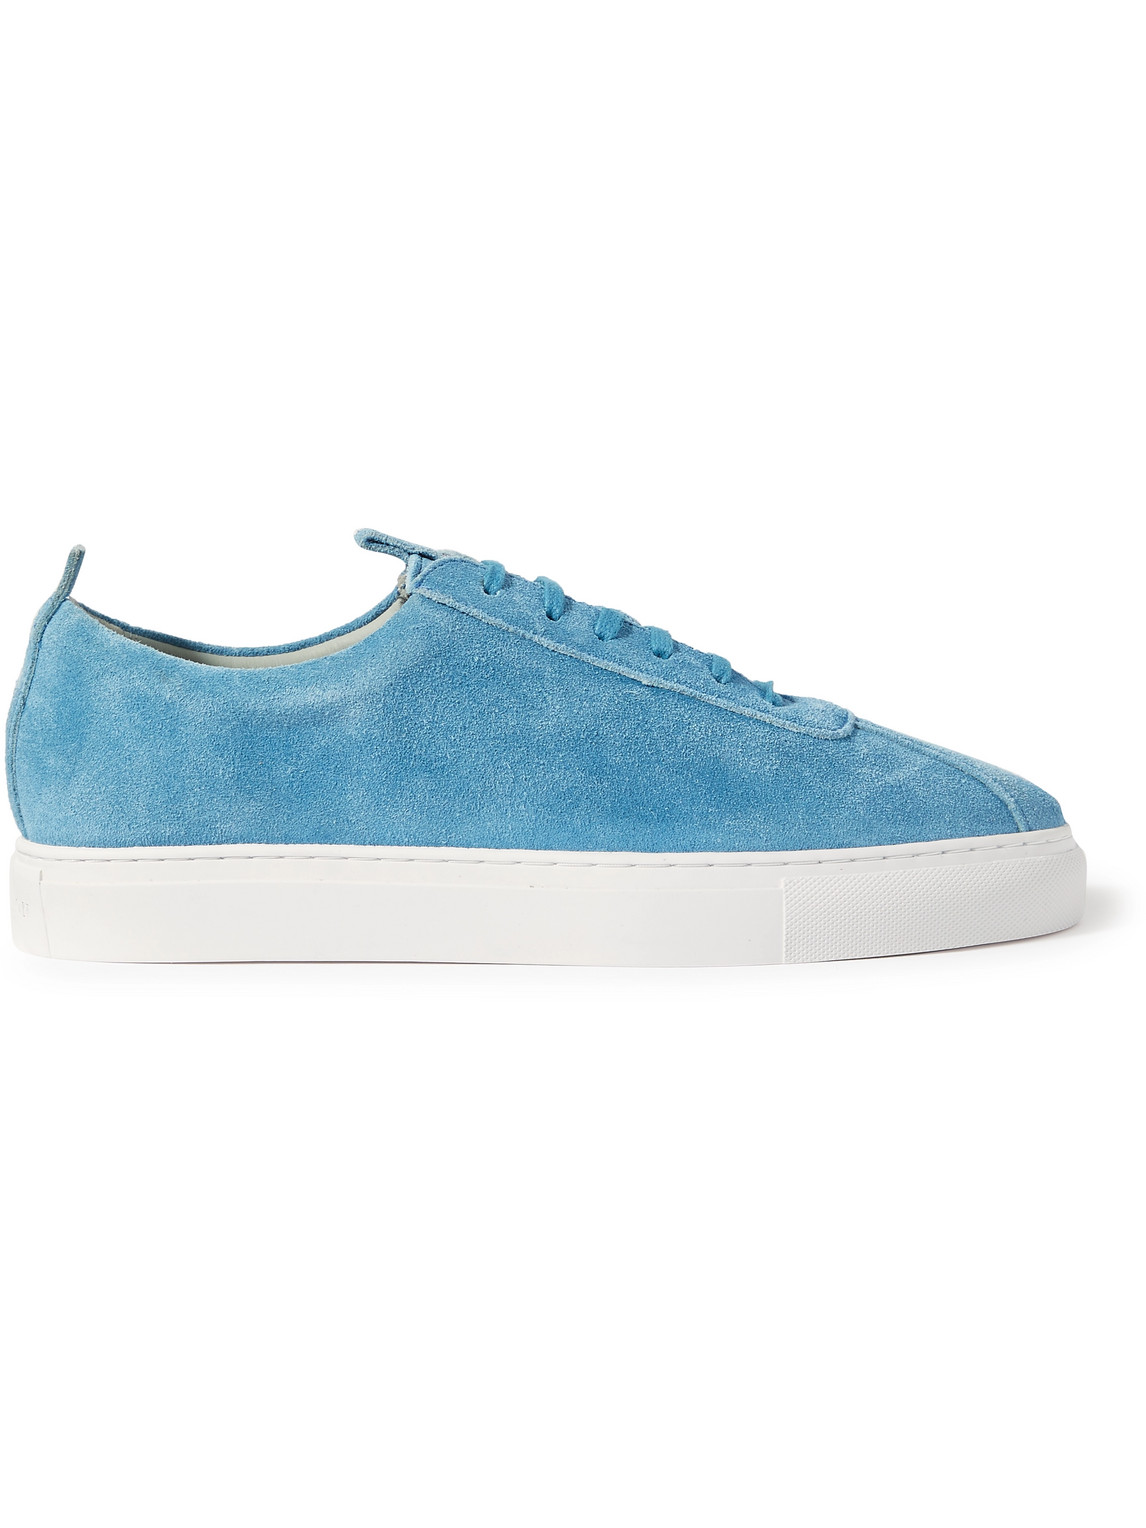 Grenson Suede Sneakers In Blue